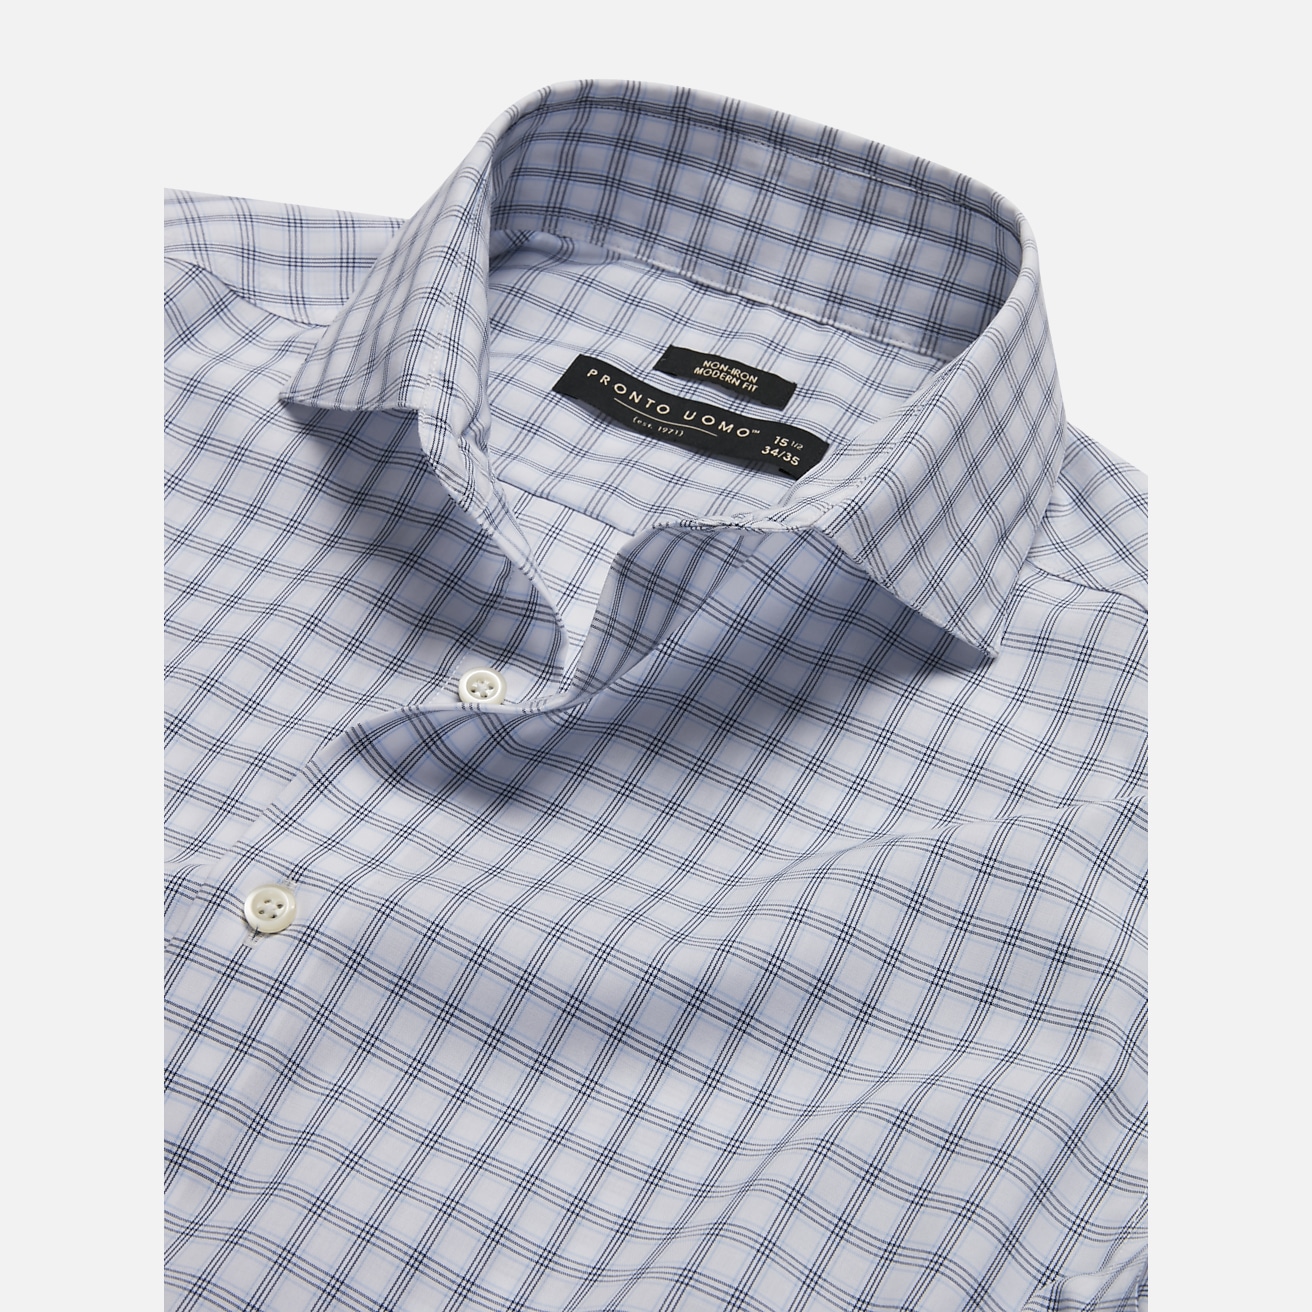 Pronto Uomo Men's Modern Fit Spread Collar Triple Check Dress Shirt at Men's Wearhouse, Blue Check - Size: 16 32/33